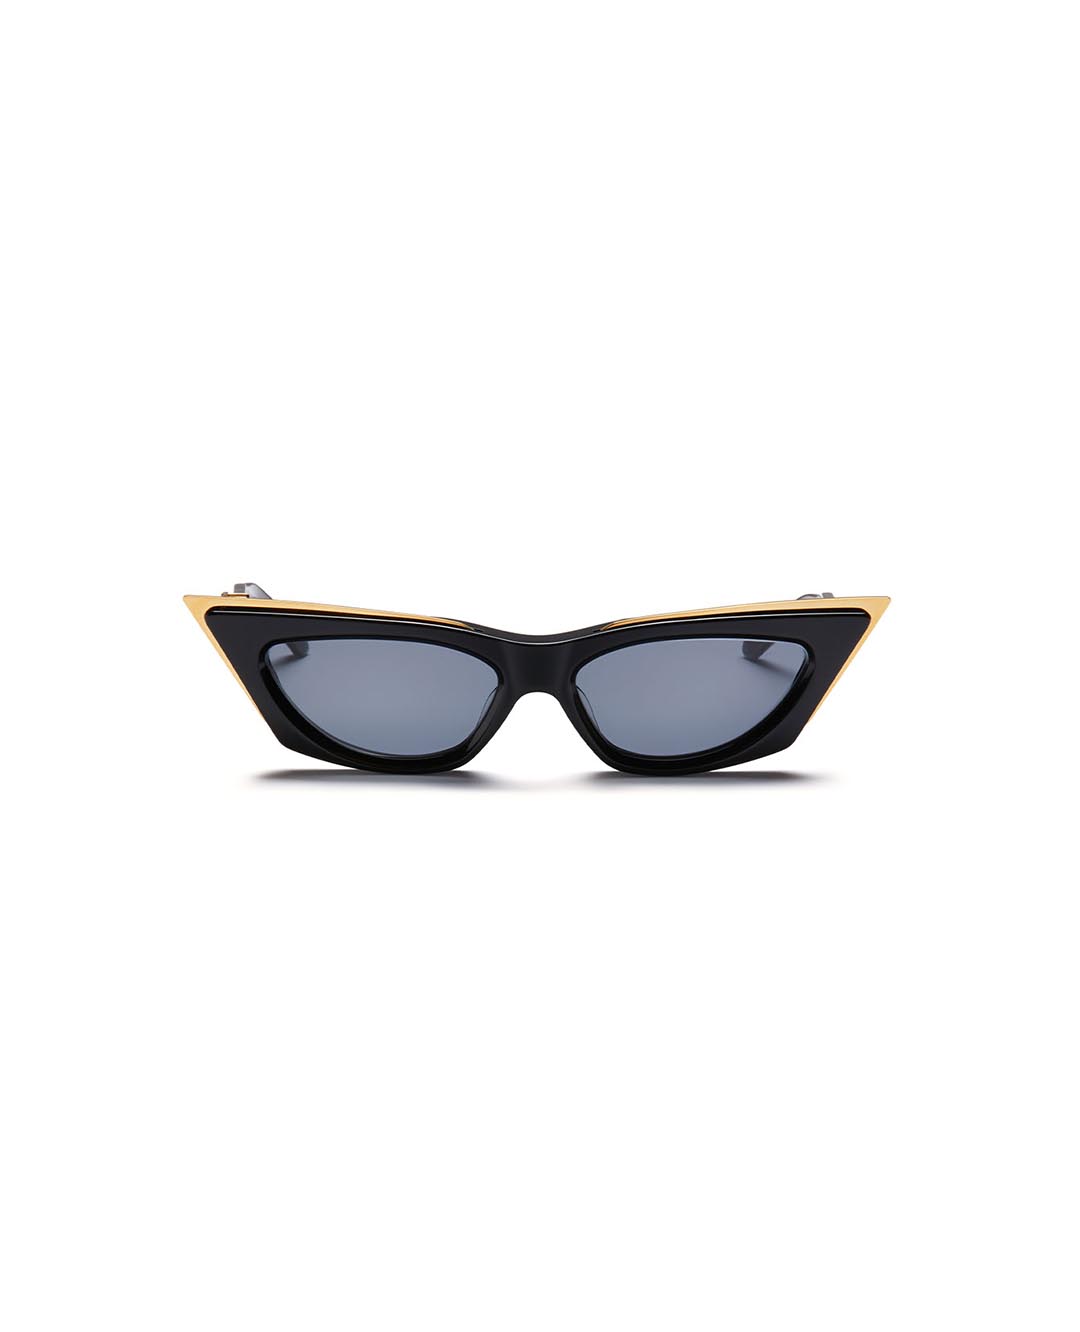 eyewear_0003_Goldcut-I-Sunglasses-01